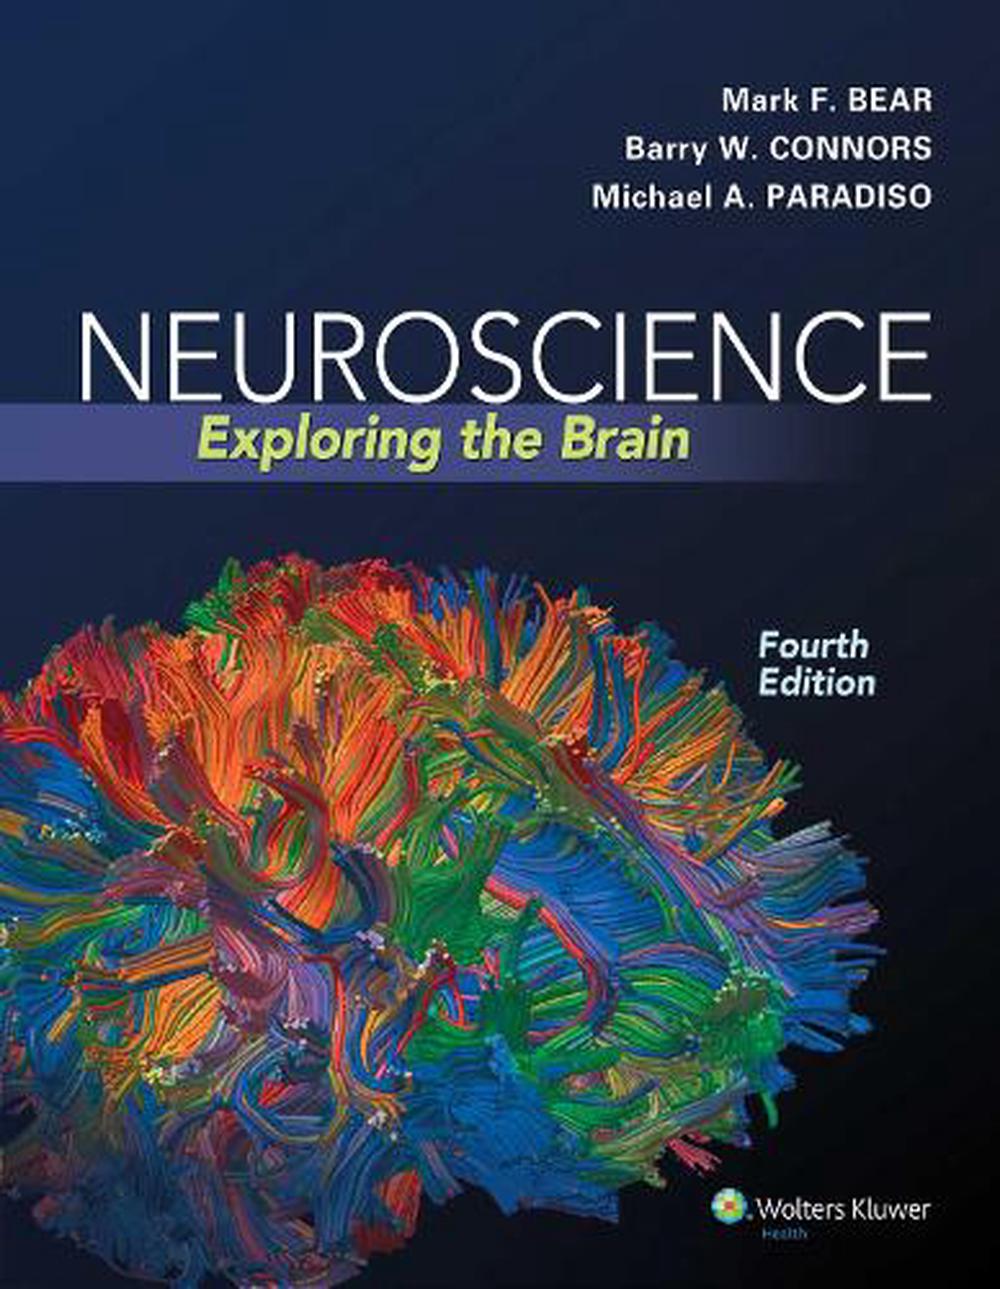 Neuroscience Exploring the Brain, 4th Edition by Mark F. Bear, Hardcover, 9780781778176 Buy